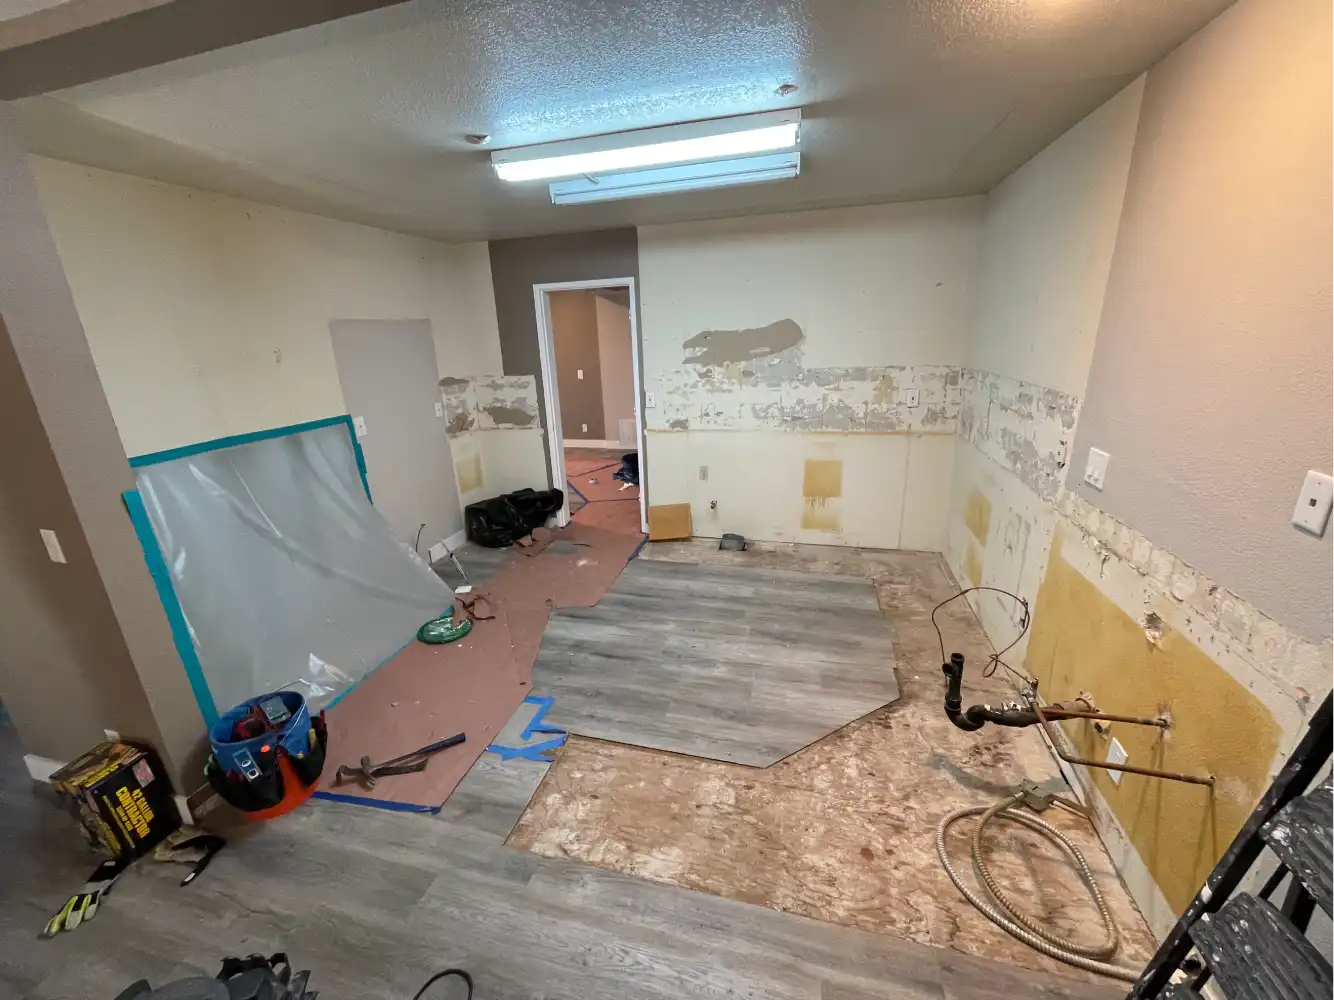 805 property restoration Kitchen Remodel before